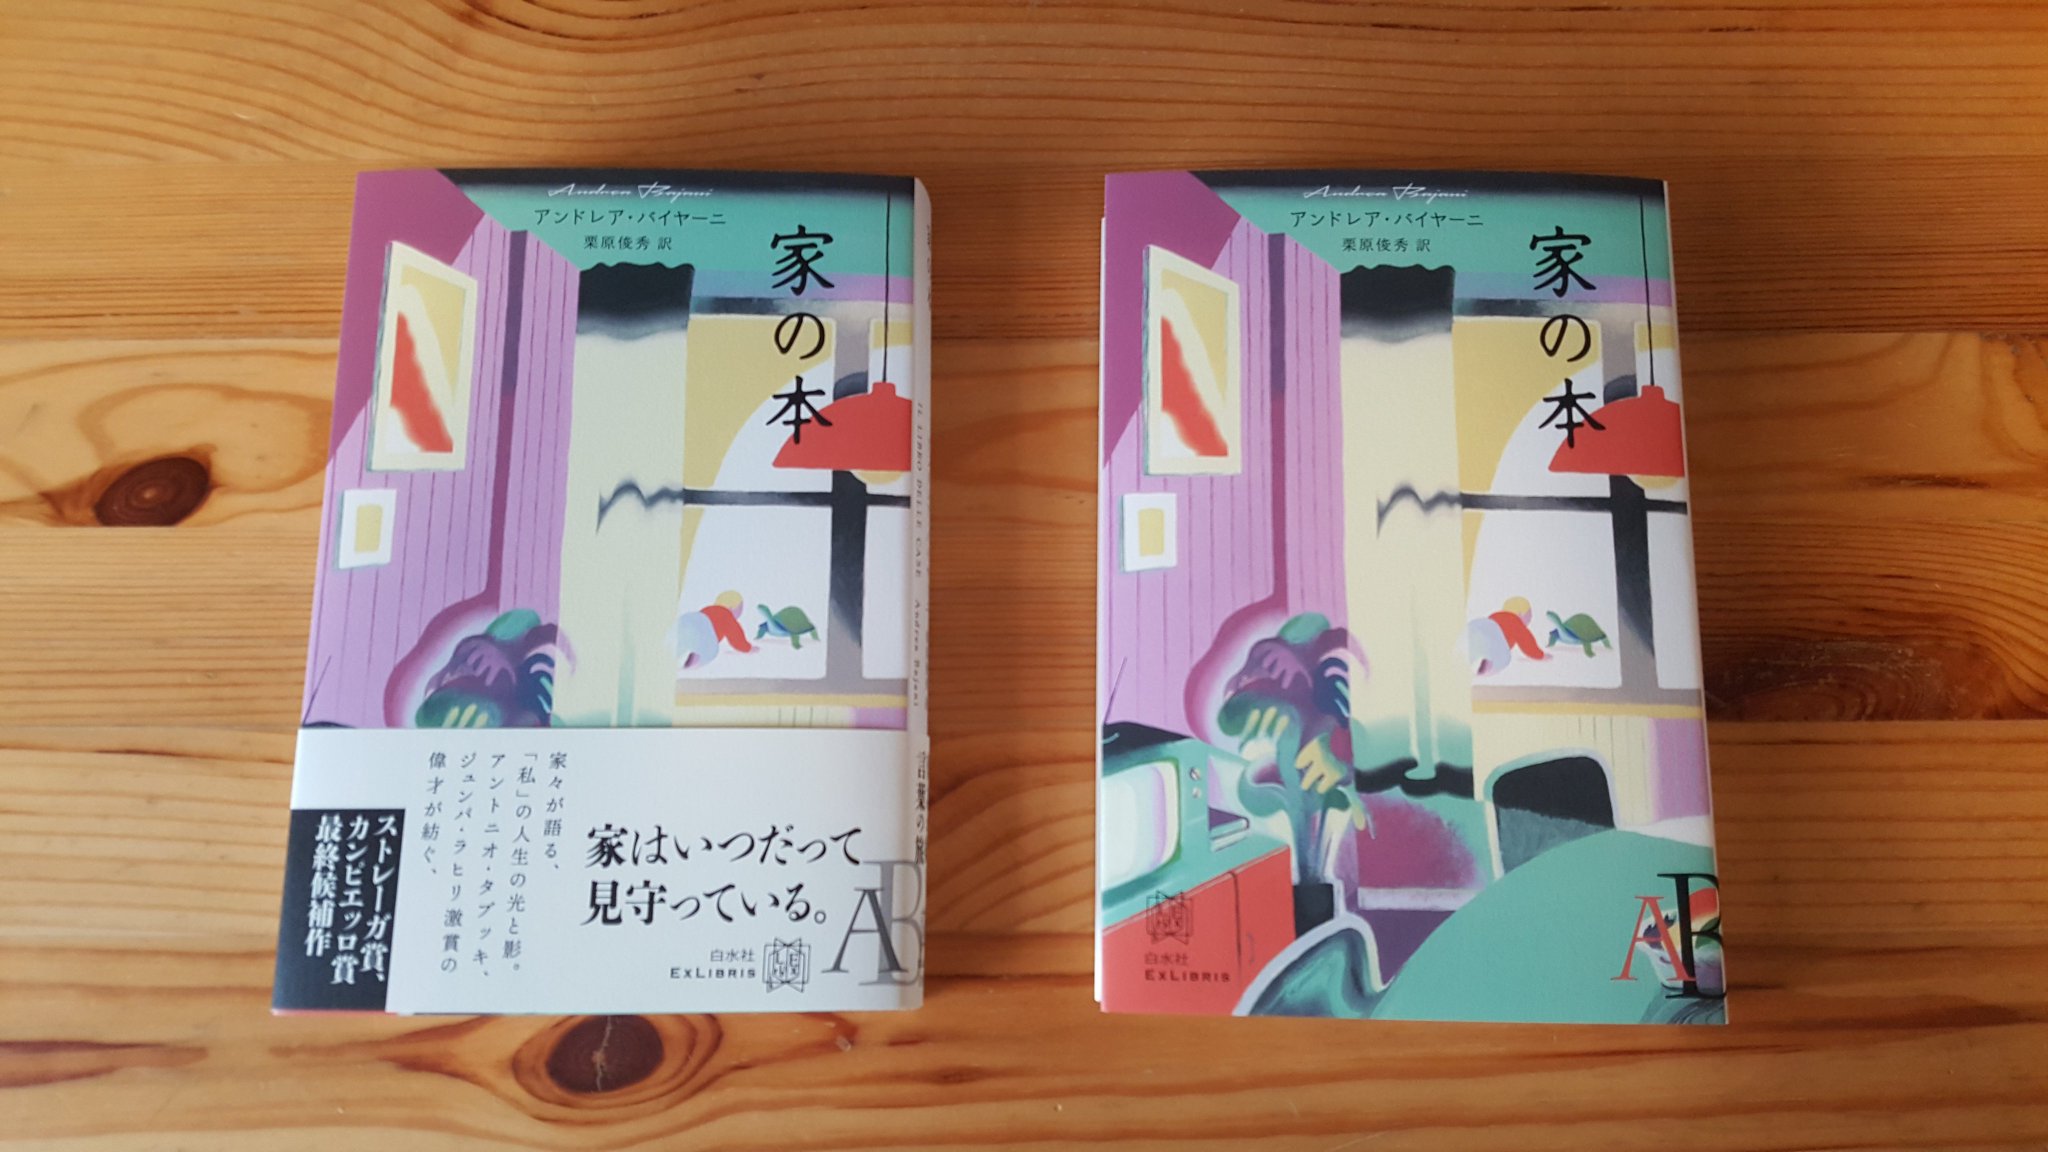 KuriharaToshihide on Twitter: "見本が届いたので告知します。白水社（@hakusuisha）エクス・リブリス